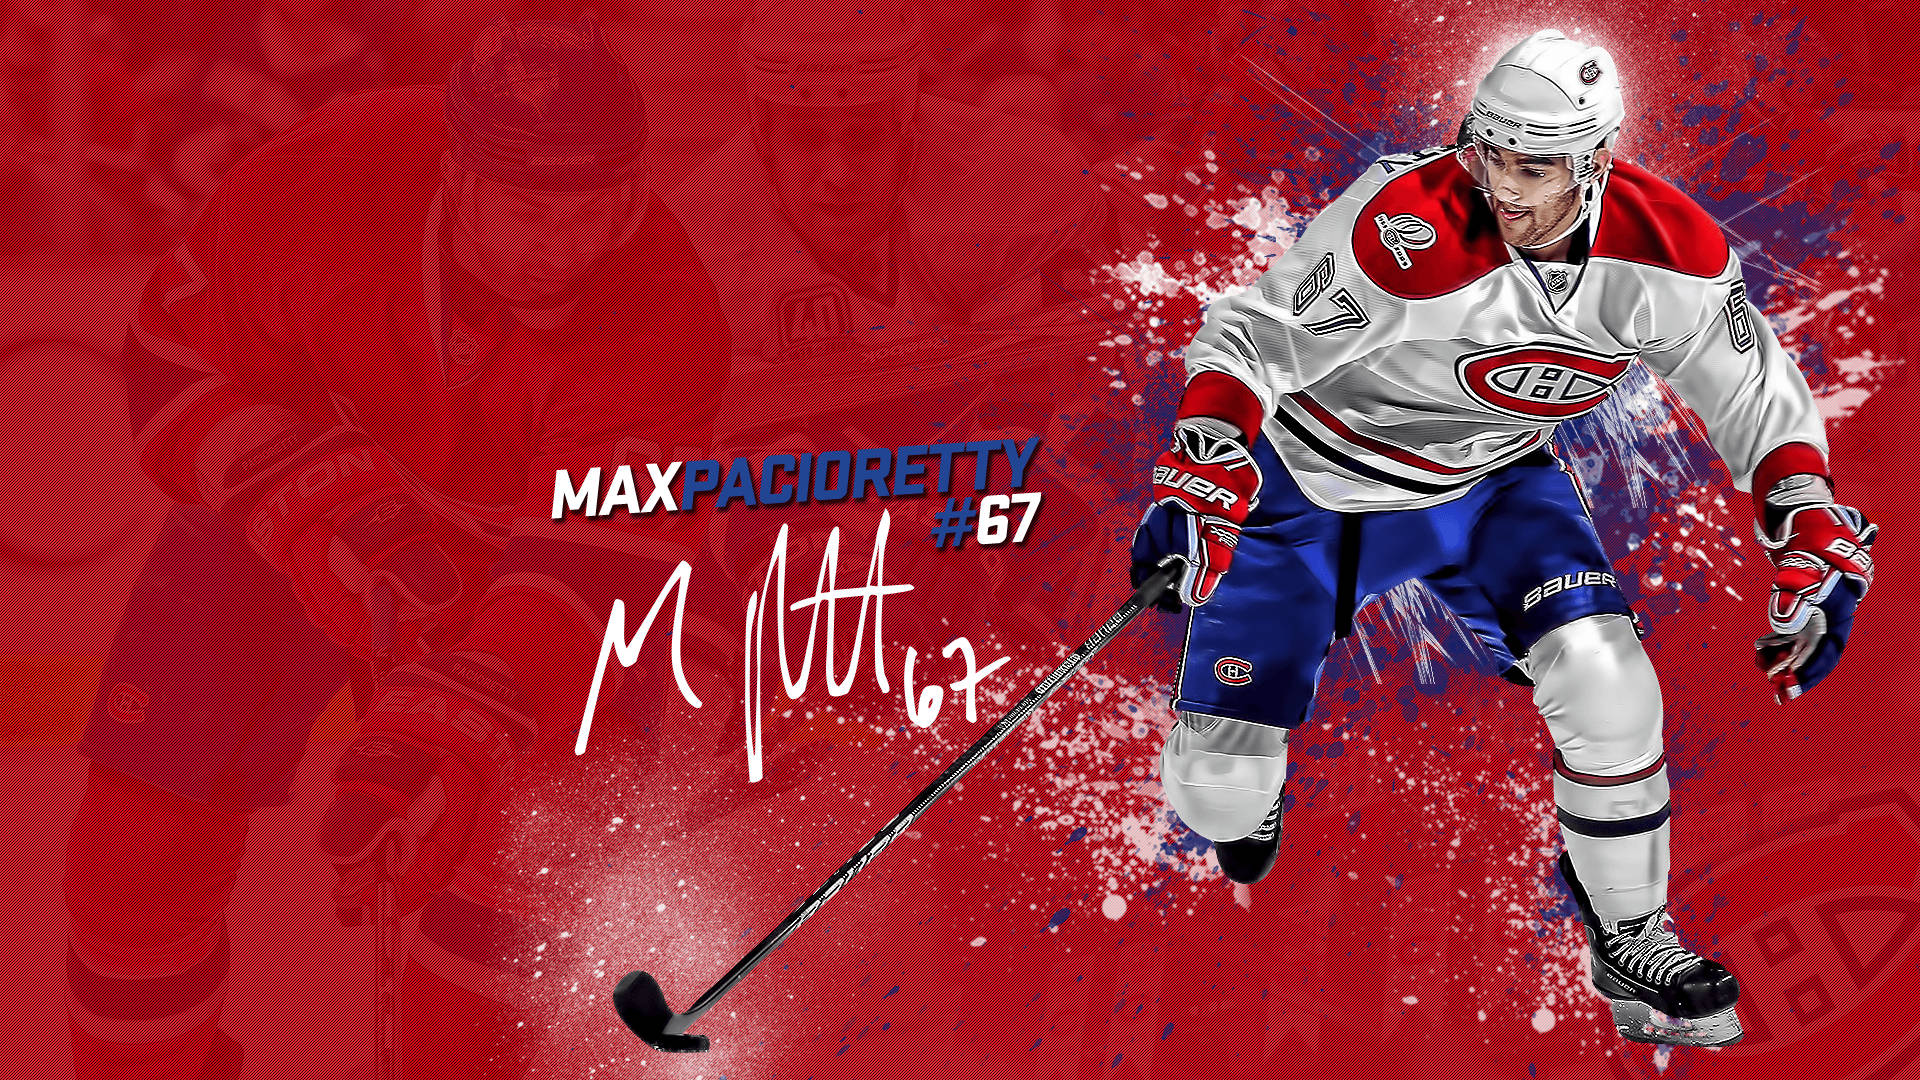 Max Pacioretty Montreal Canadiens Fanart Wallpaper